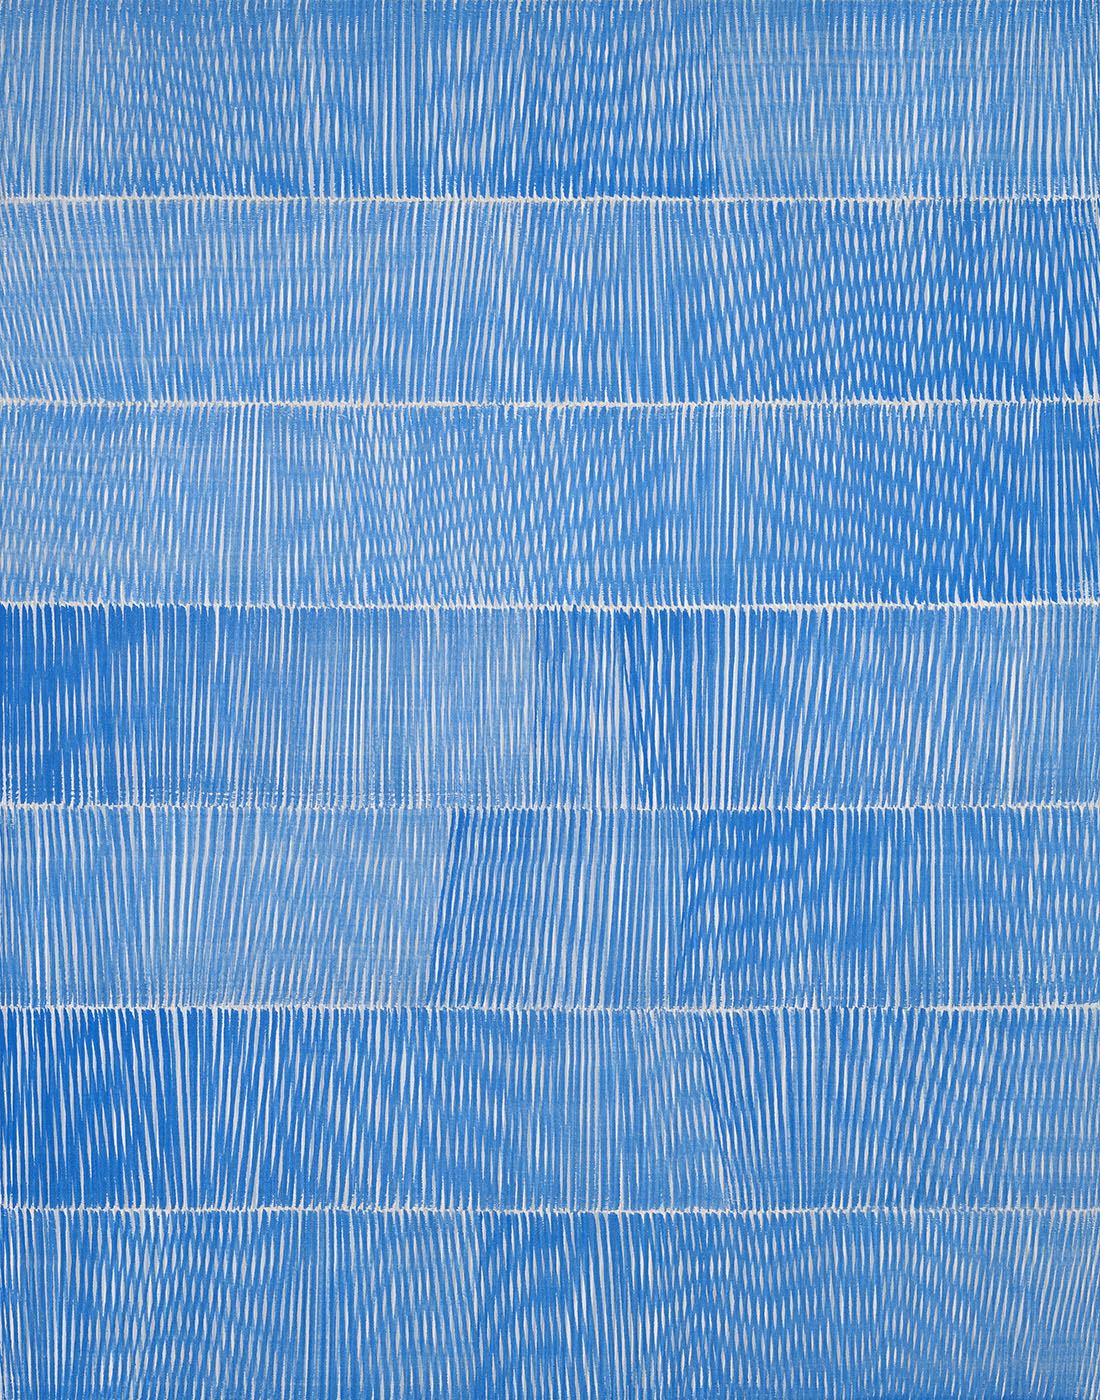 Nikola Dimitrov, Rhythmen Blau, 2023, Pigmente, Bindemittel auf Leinwand, 140 × 110 cm